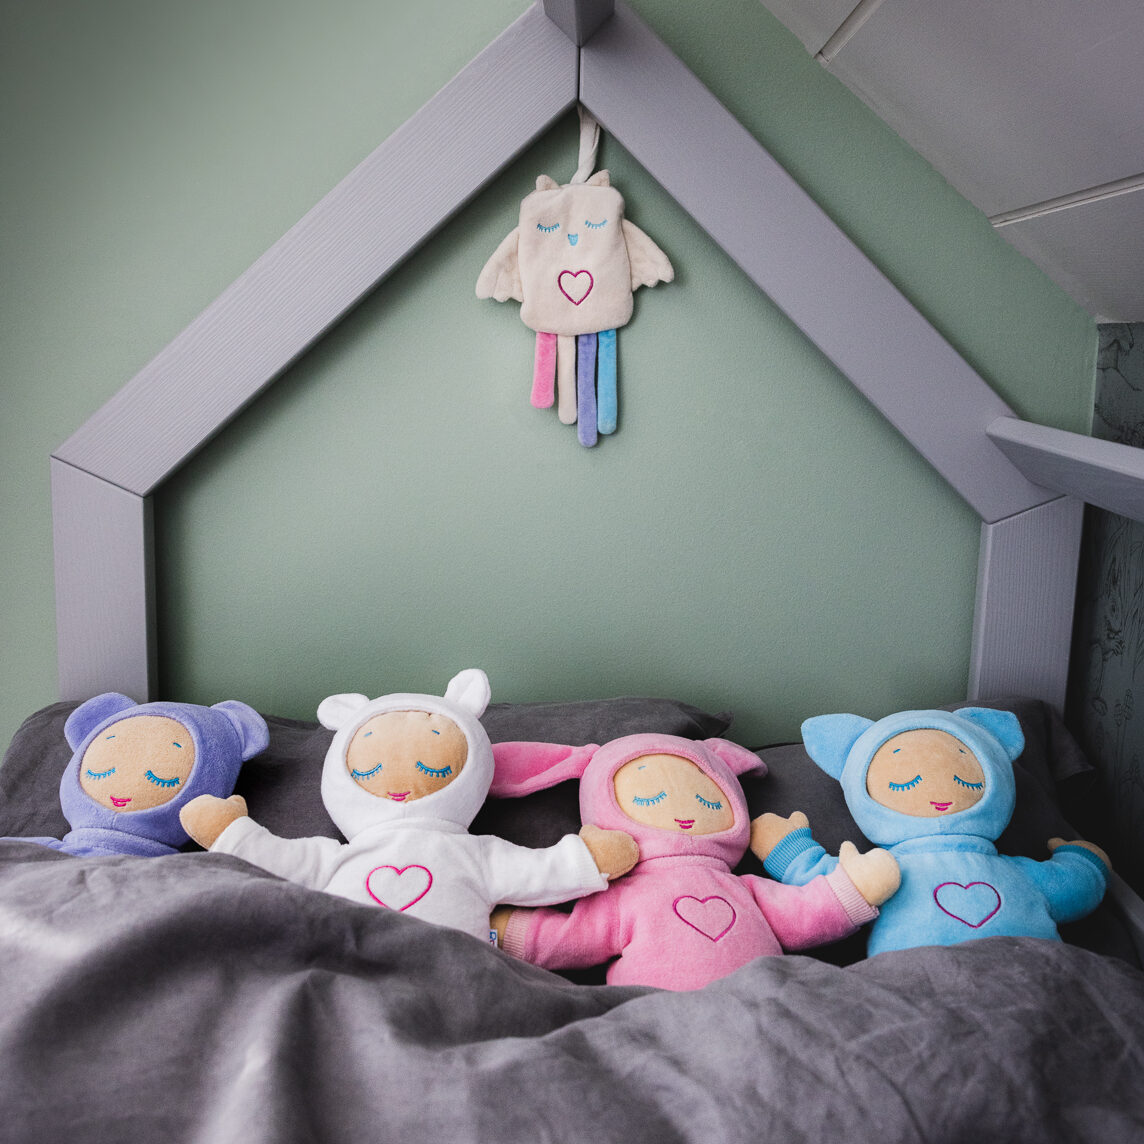 Lulla Doll Sleep Companion for Babies & Toddlers!